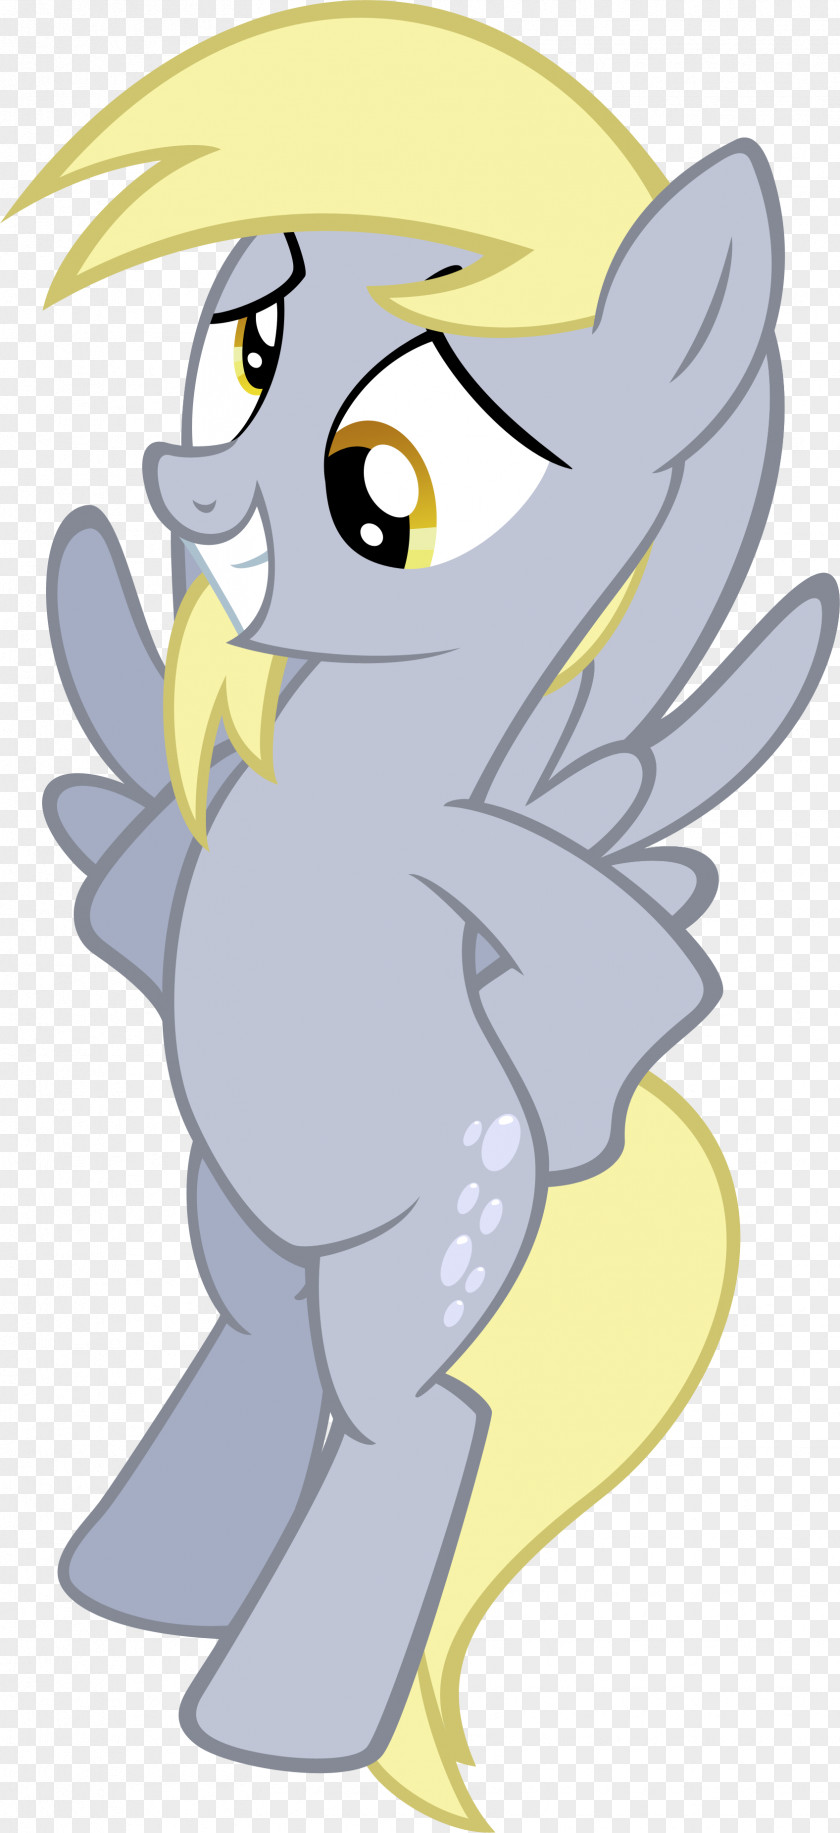 Derpy Hooves Pony Princess Luna Celestia Horse PNG